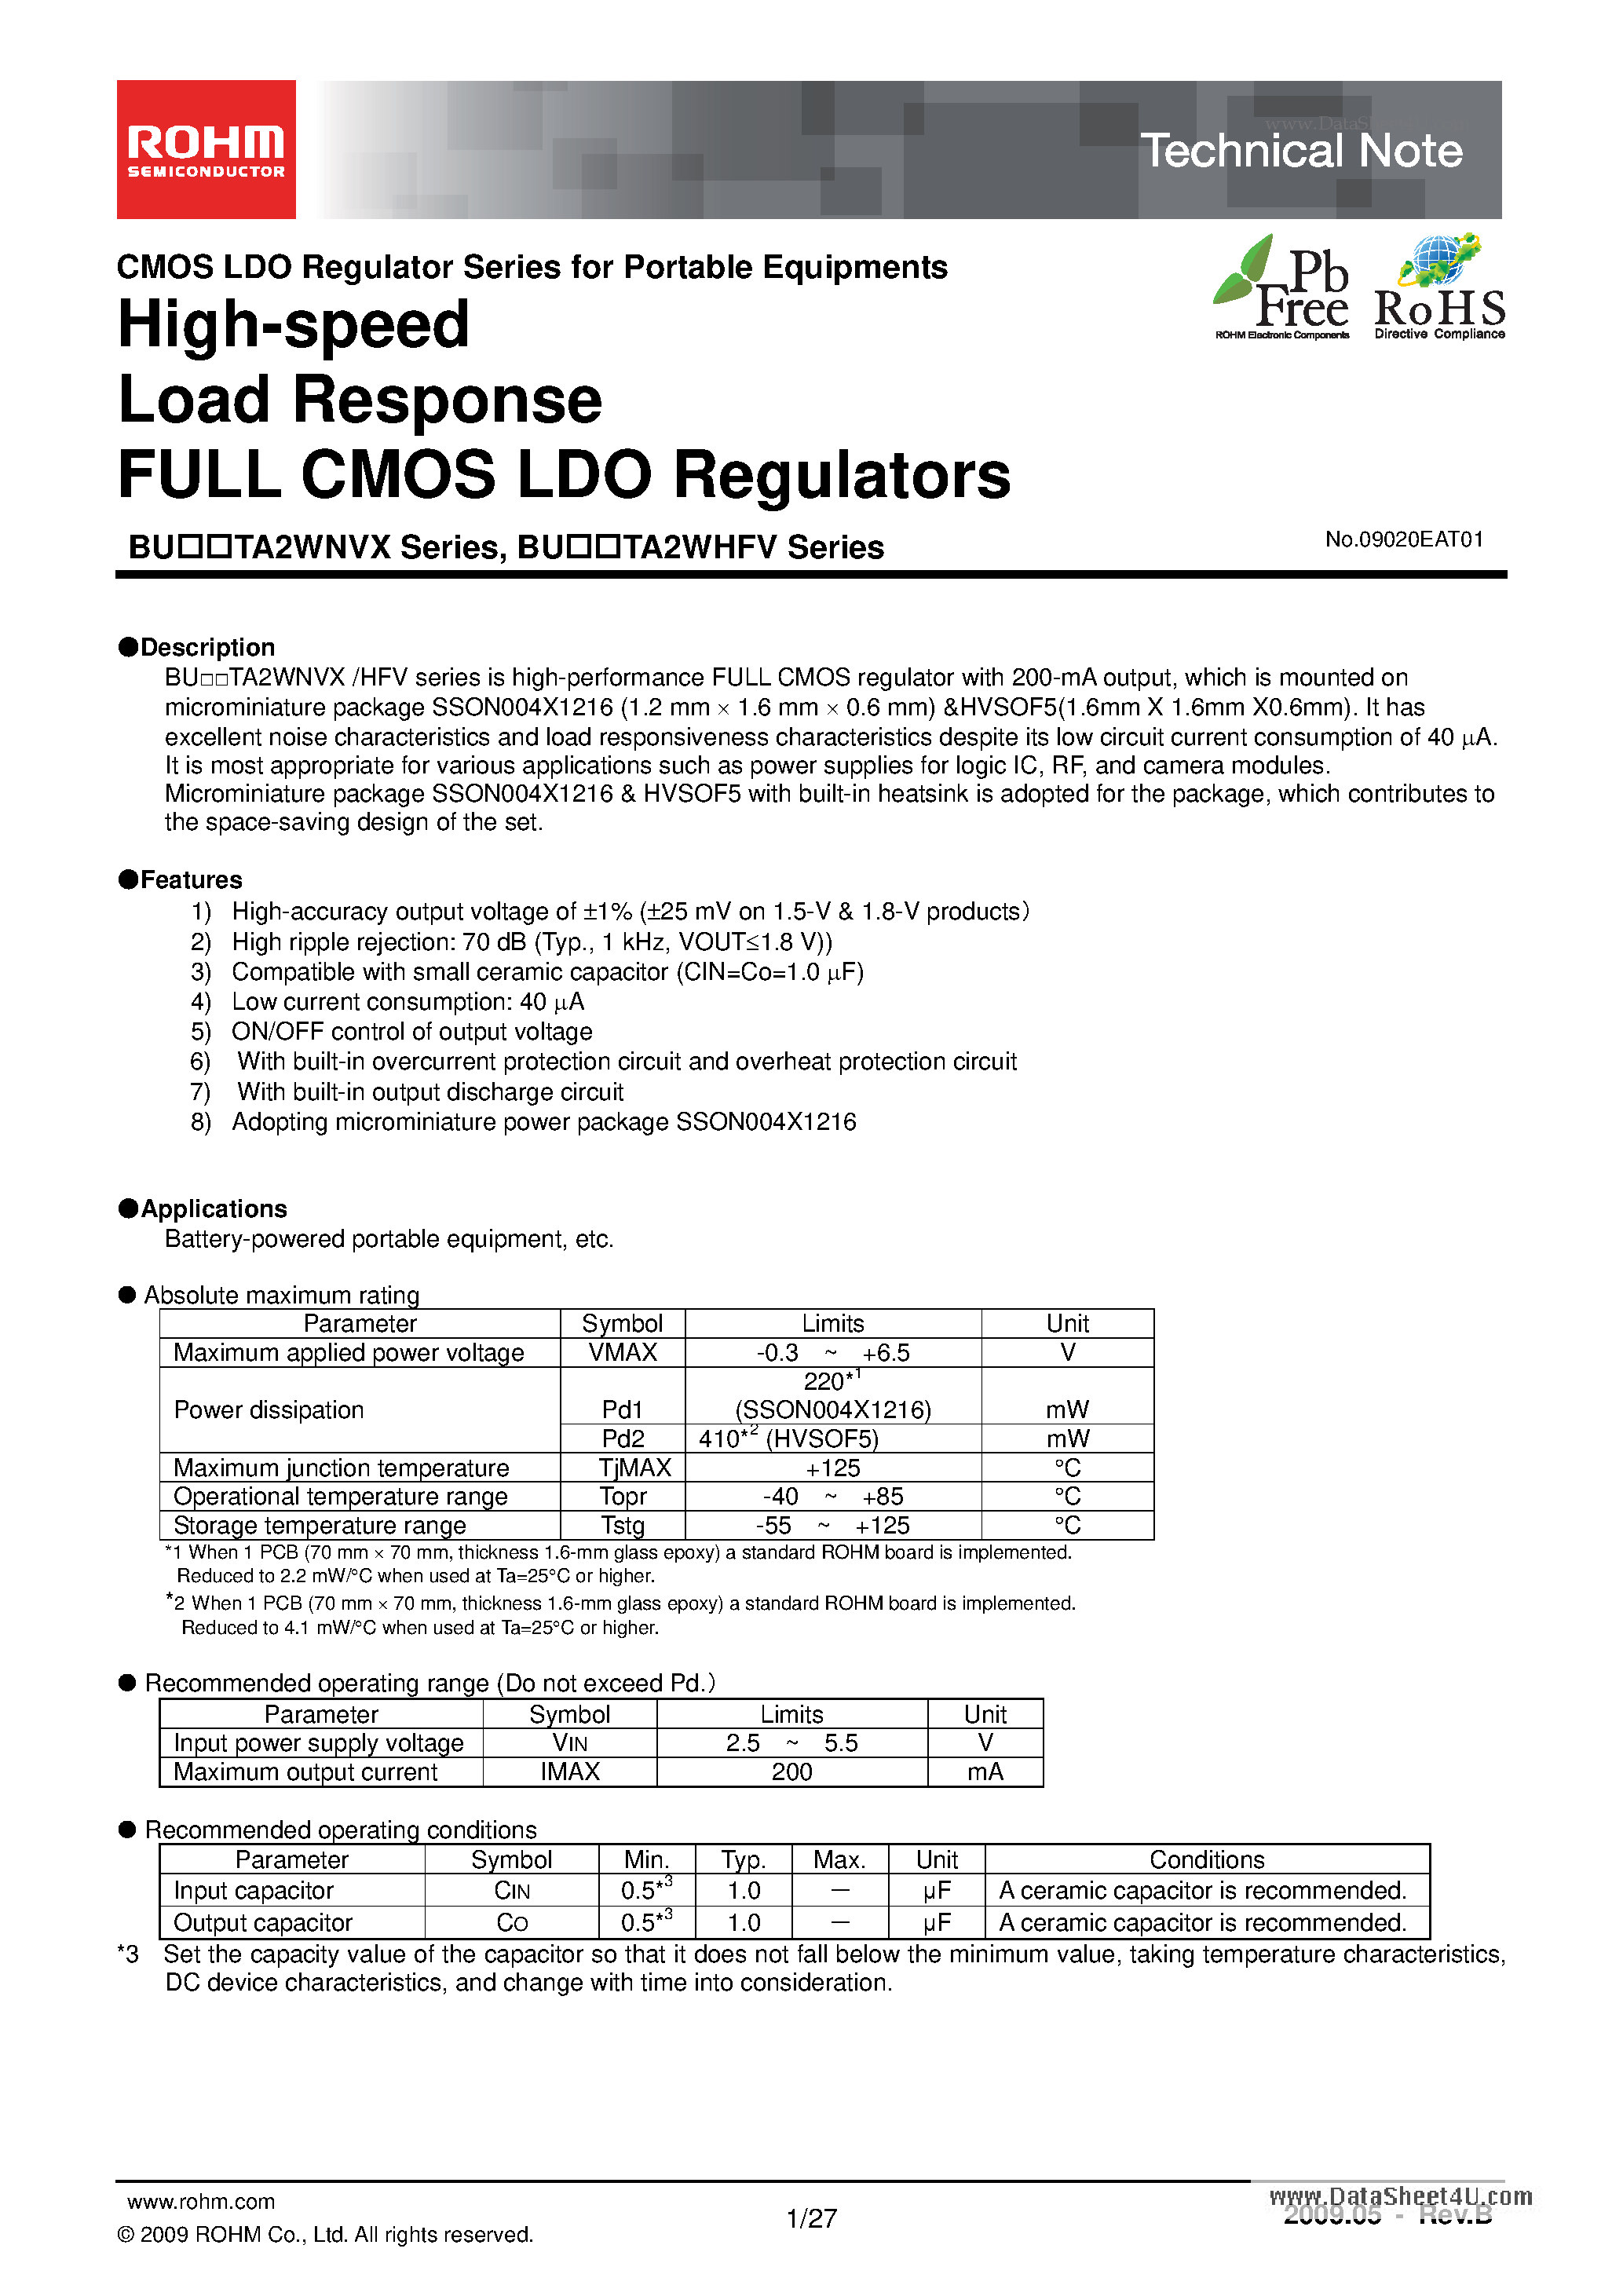 Даташит BU15TA2WHFV - High-speed Load Response FULL CMOS LDO Regulators страница 1